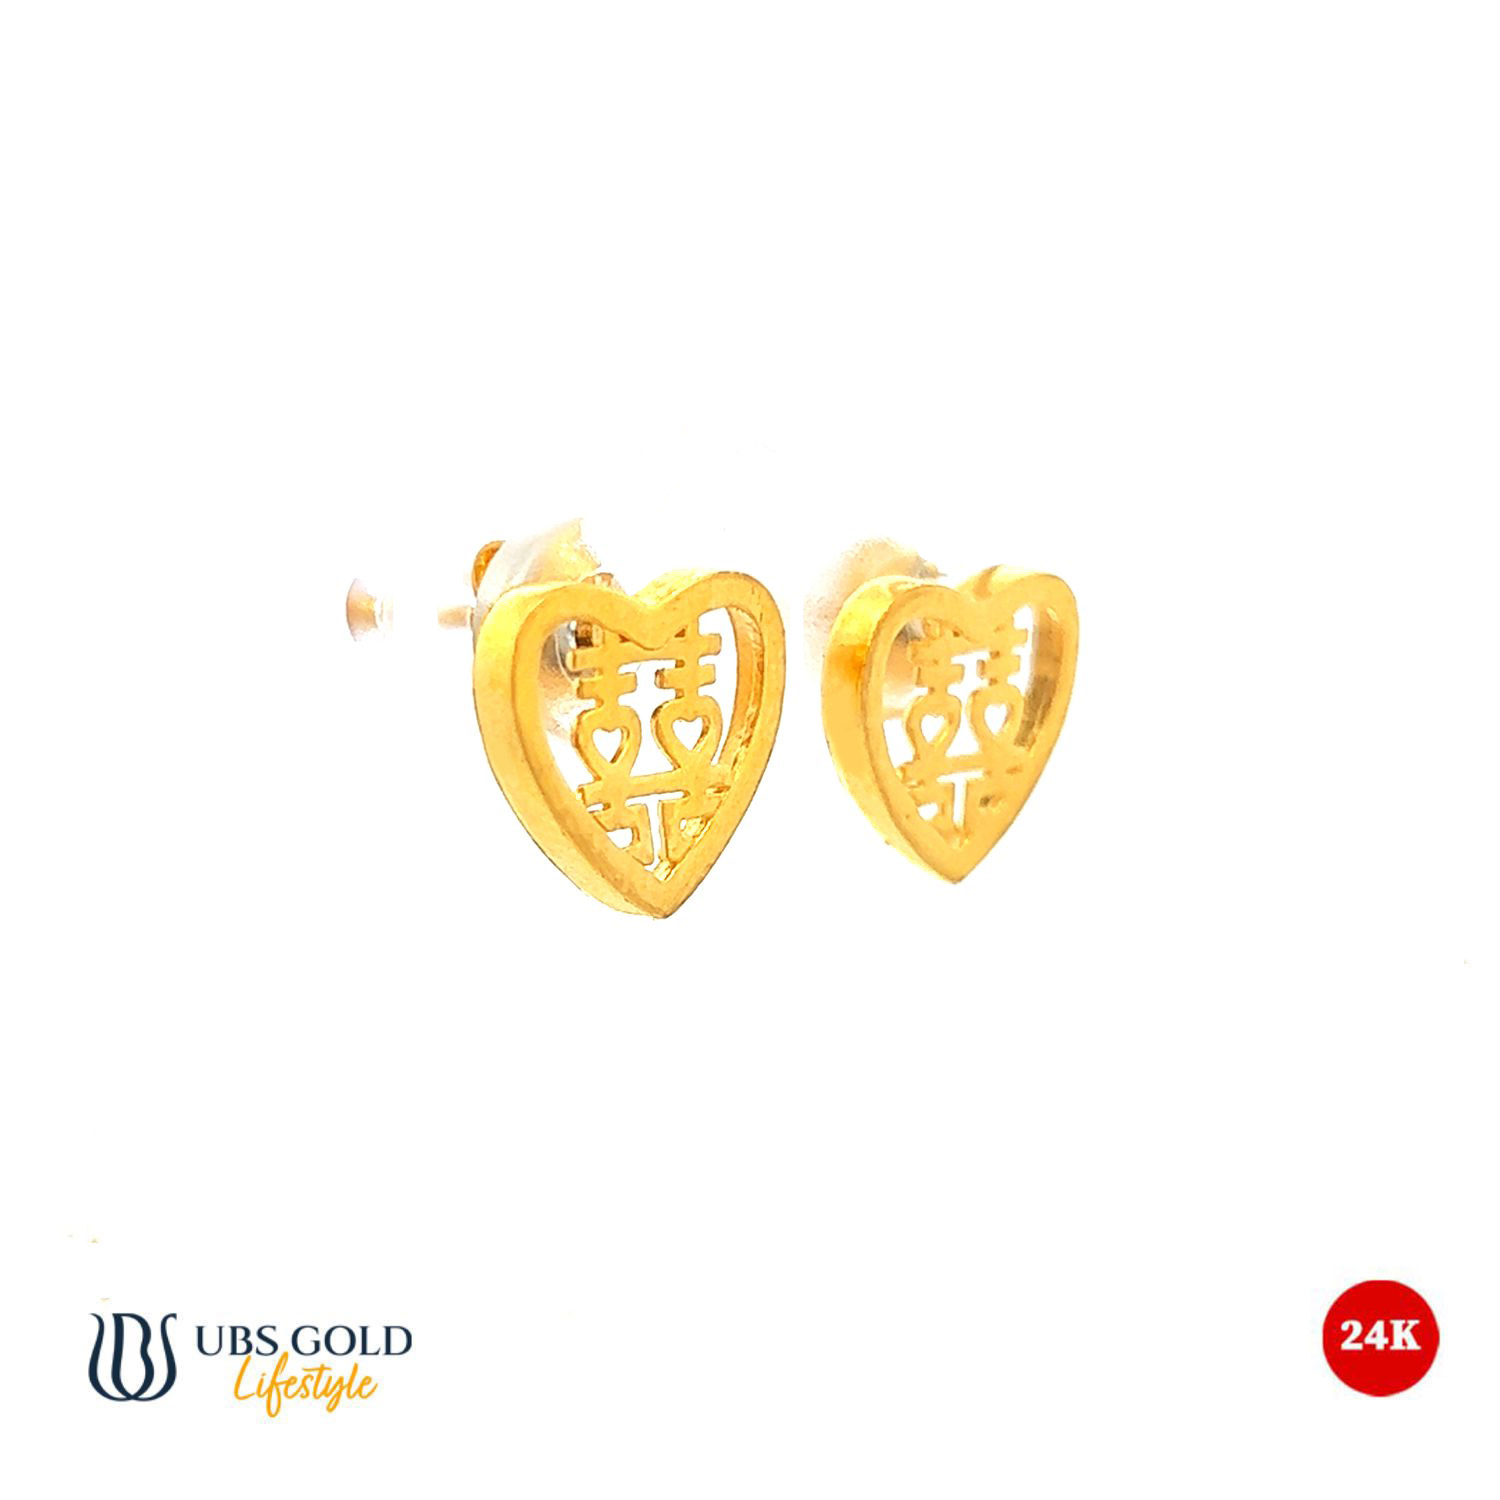 UBS Gold Anting Emas Shuang Xi - Cwh0154 - 24K